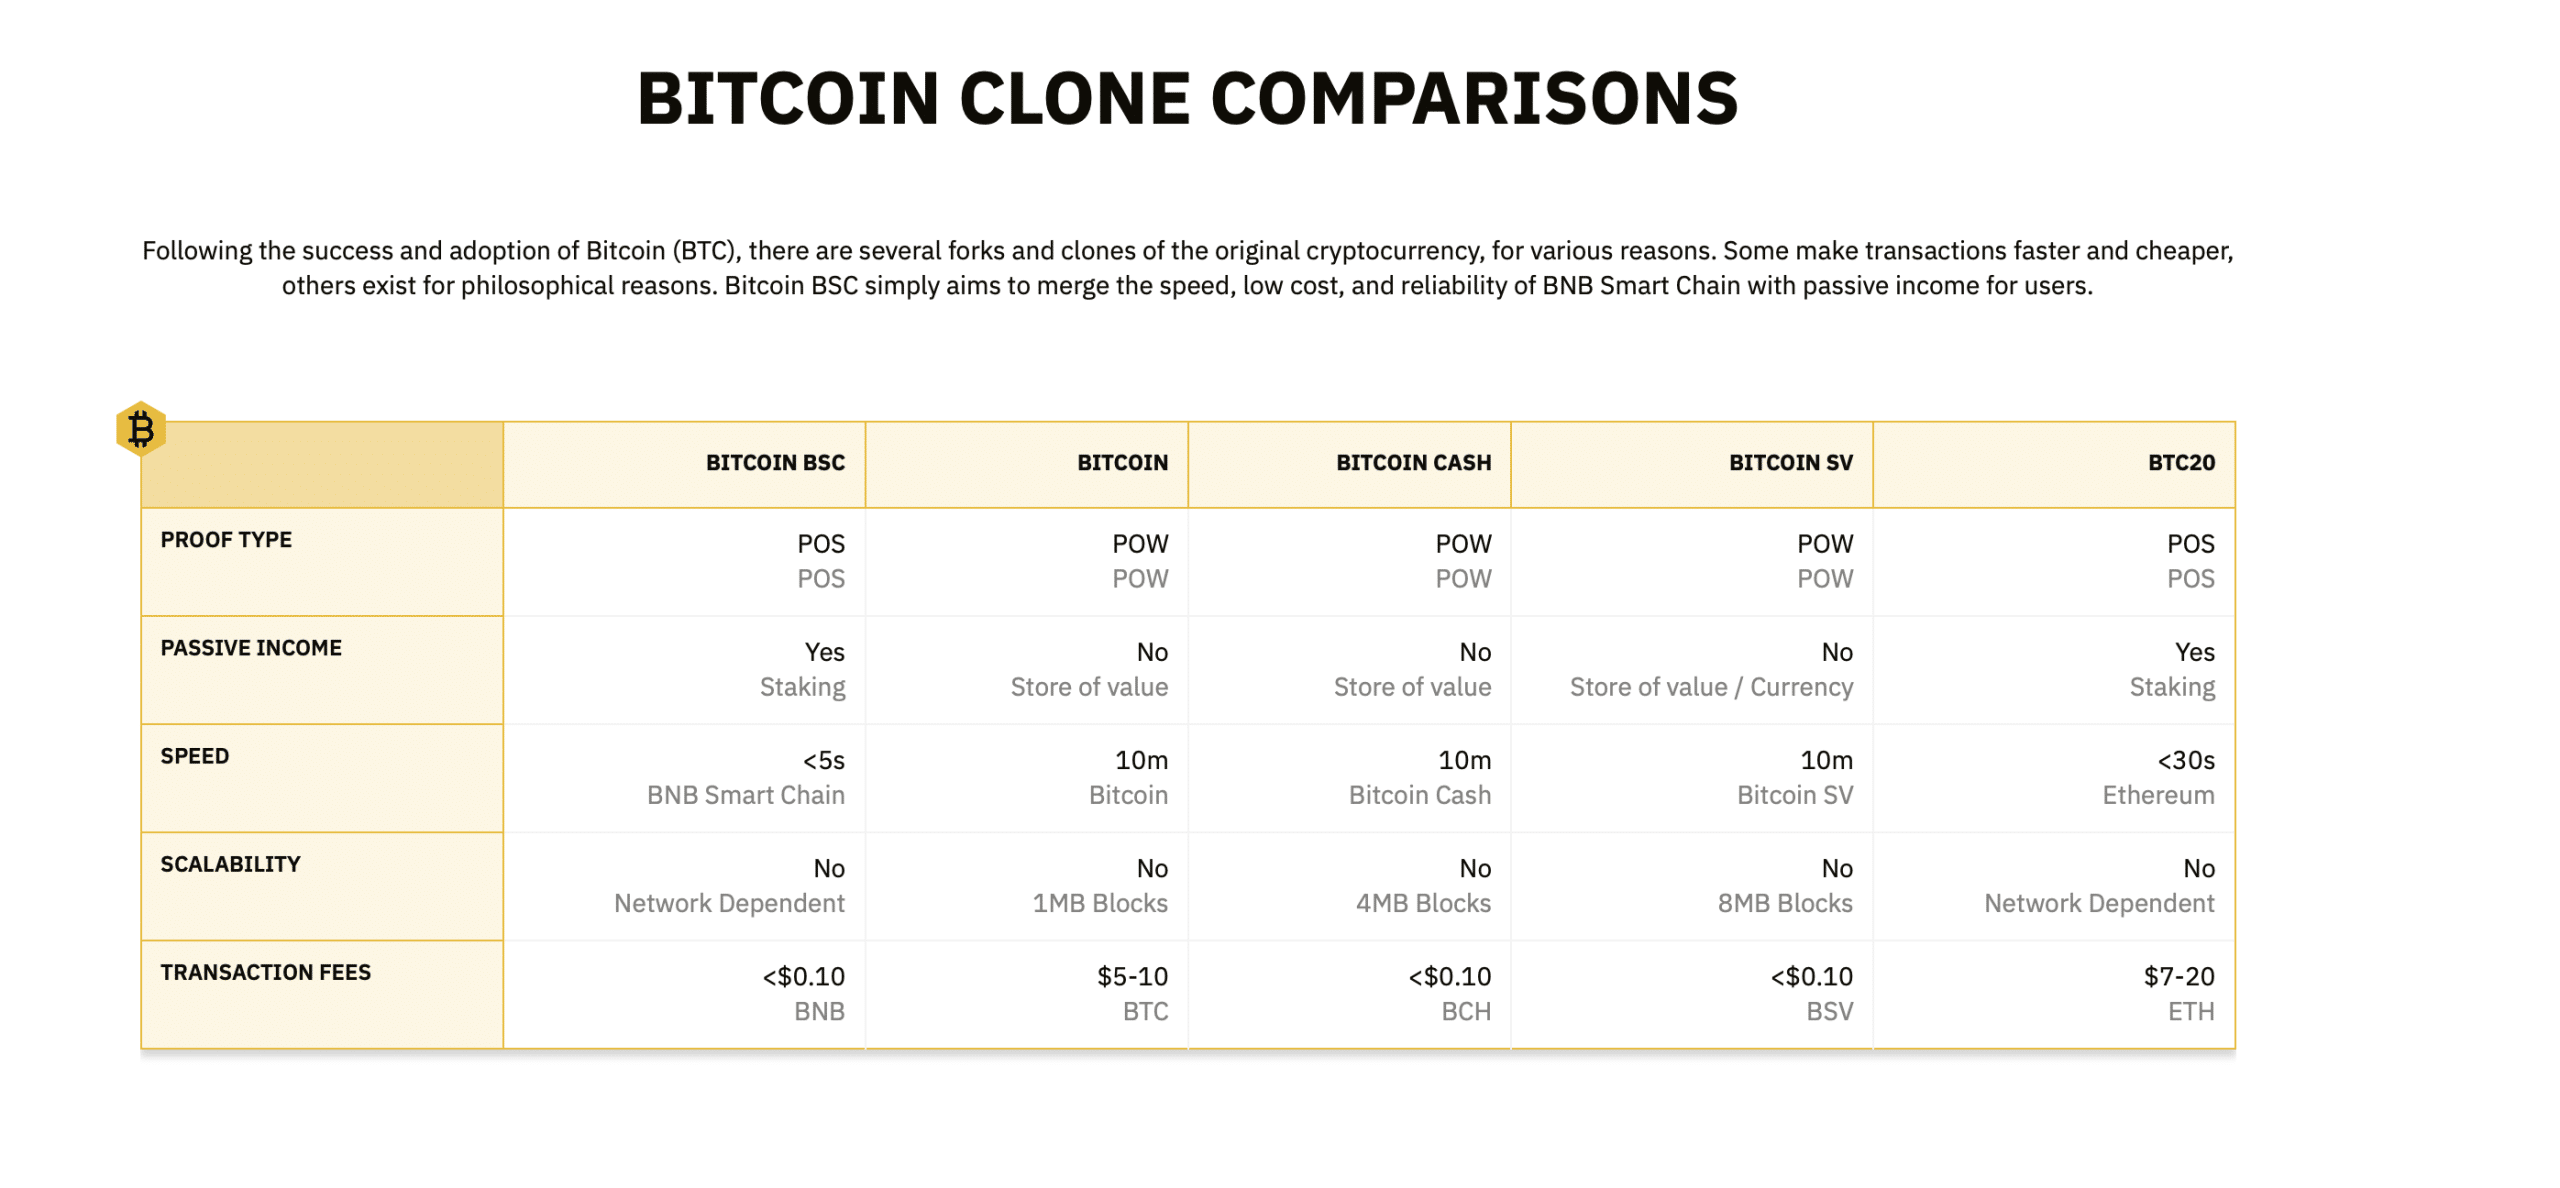 Bitcoin BSC Vergleich mit anderen Token